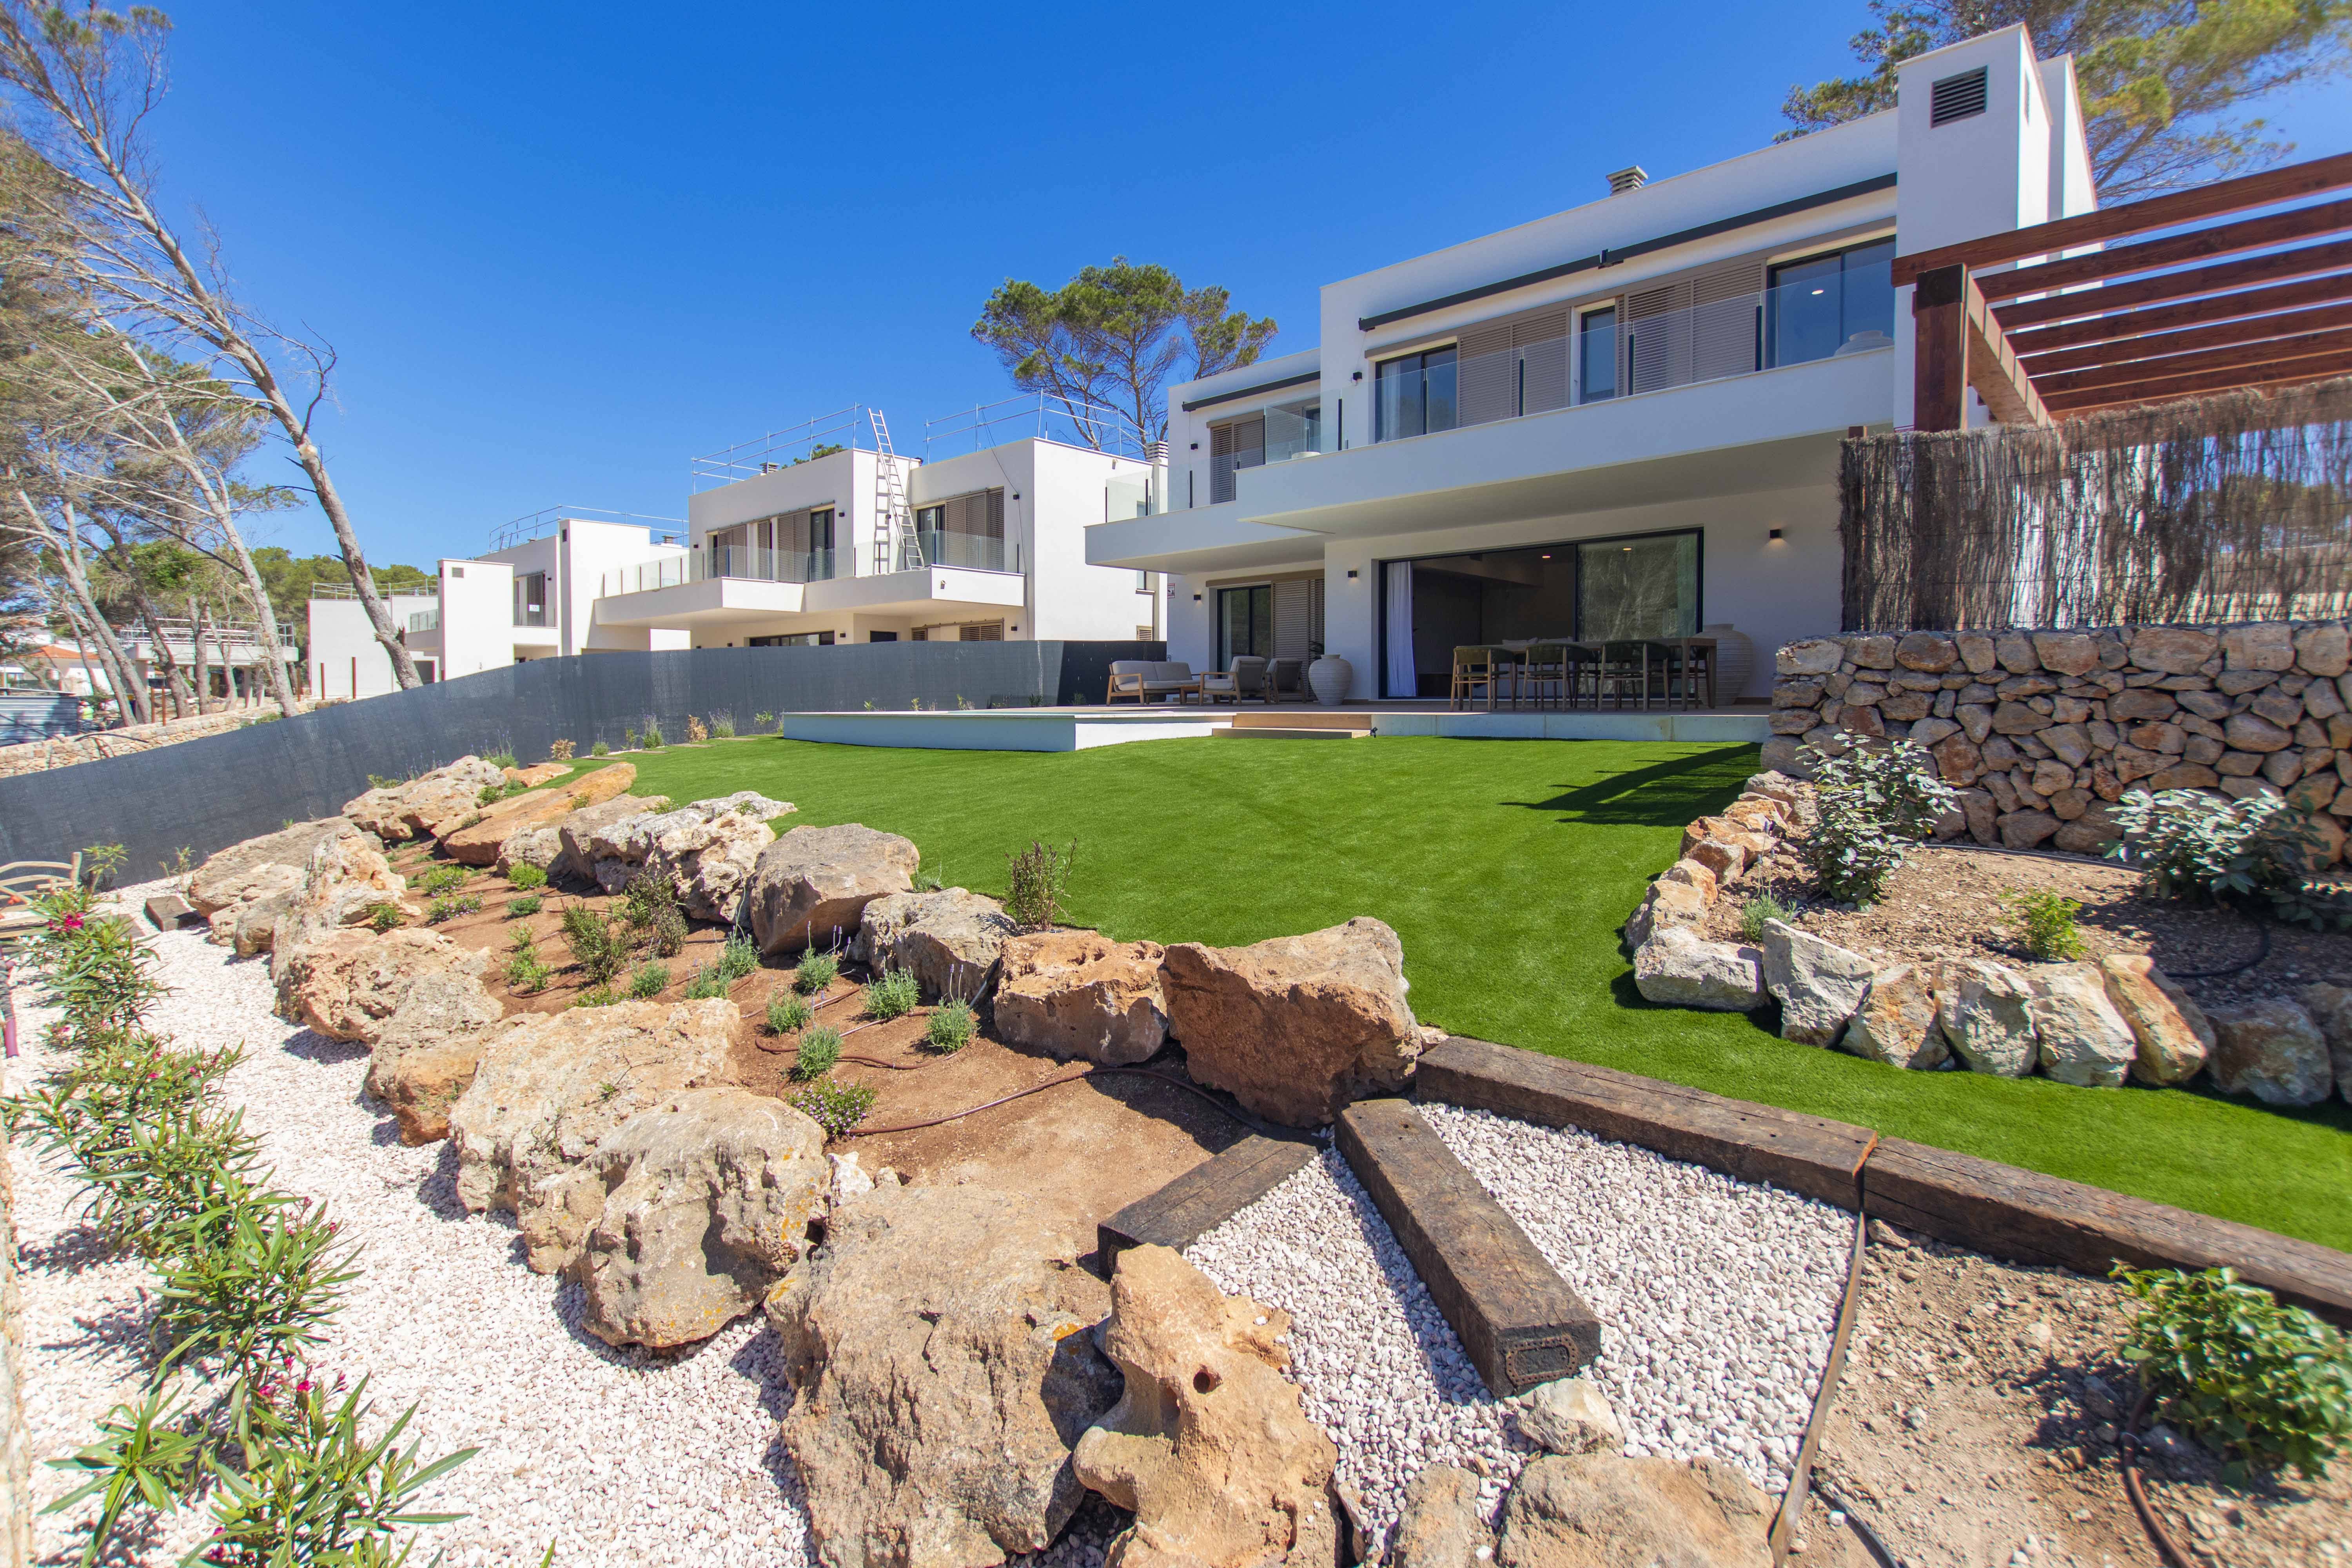 Promotion - Sa Llosa Homes, Promotion von Luxus Ferienhäusern: 50 Villen in Son Parc, Menorca.